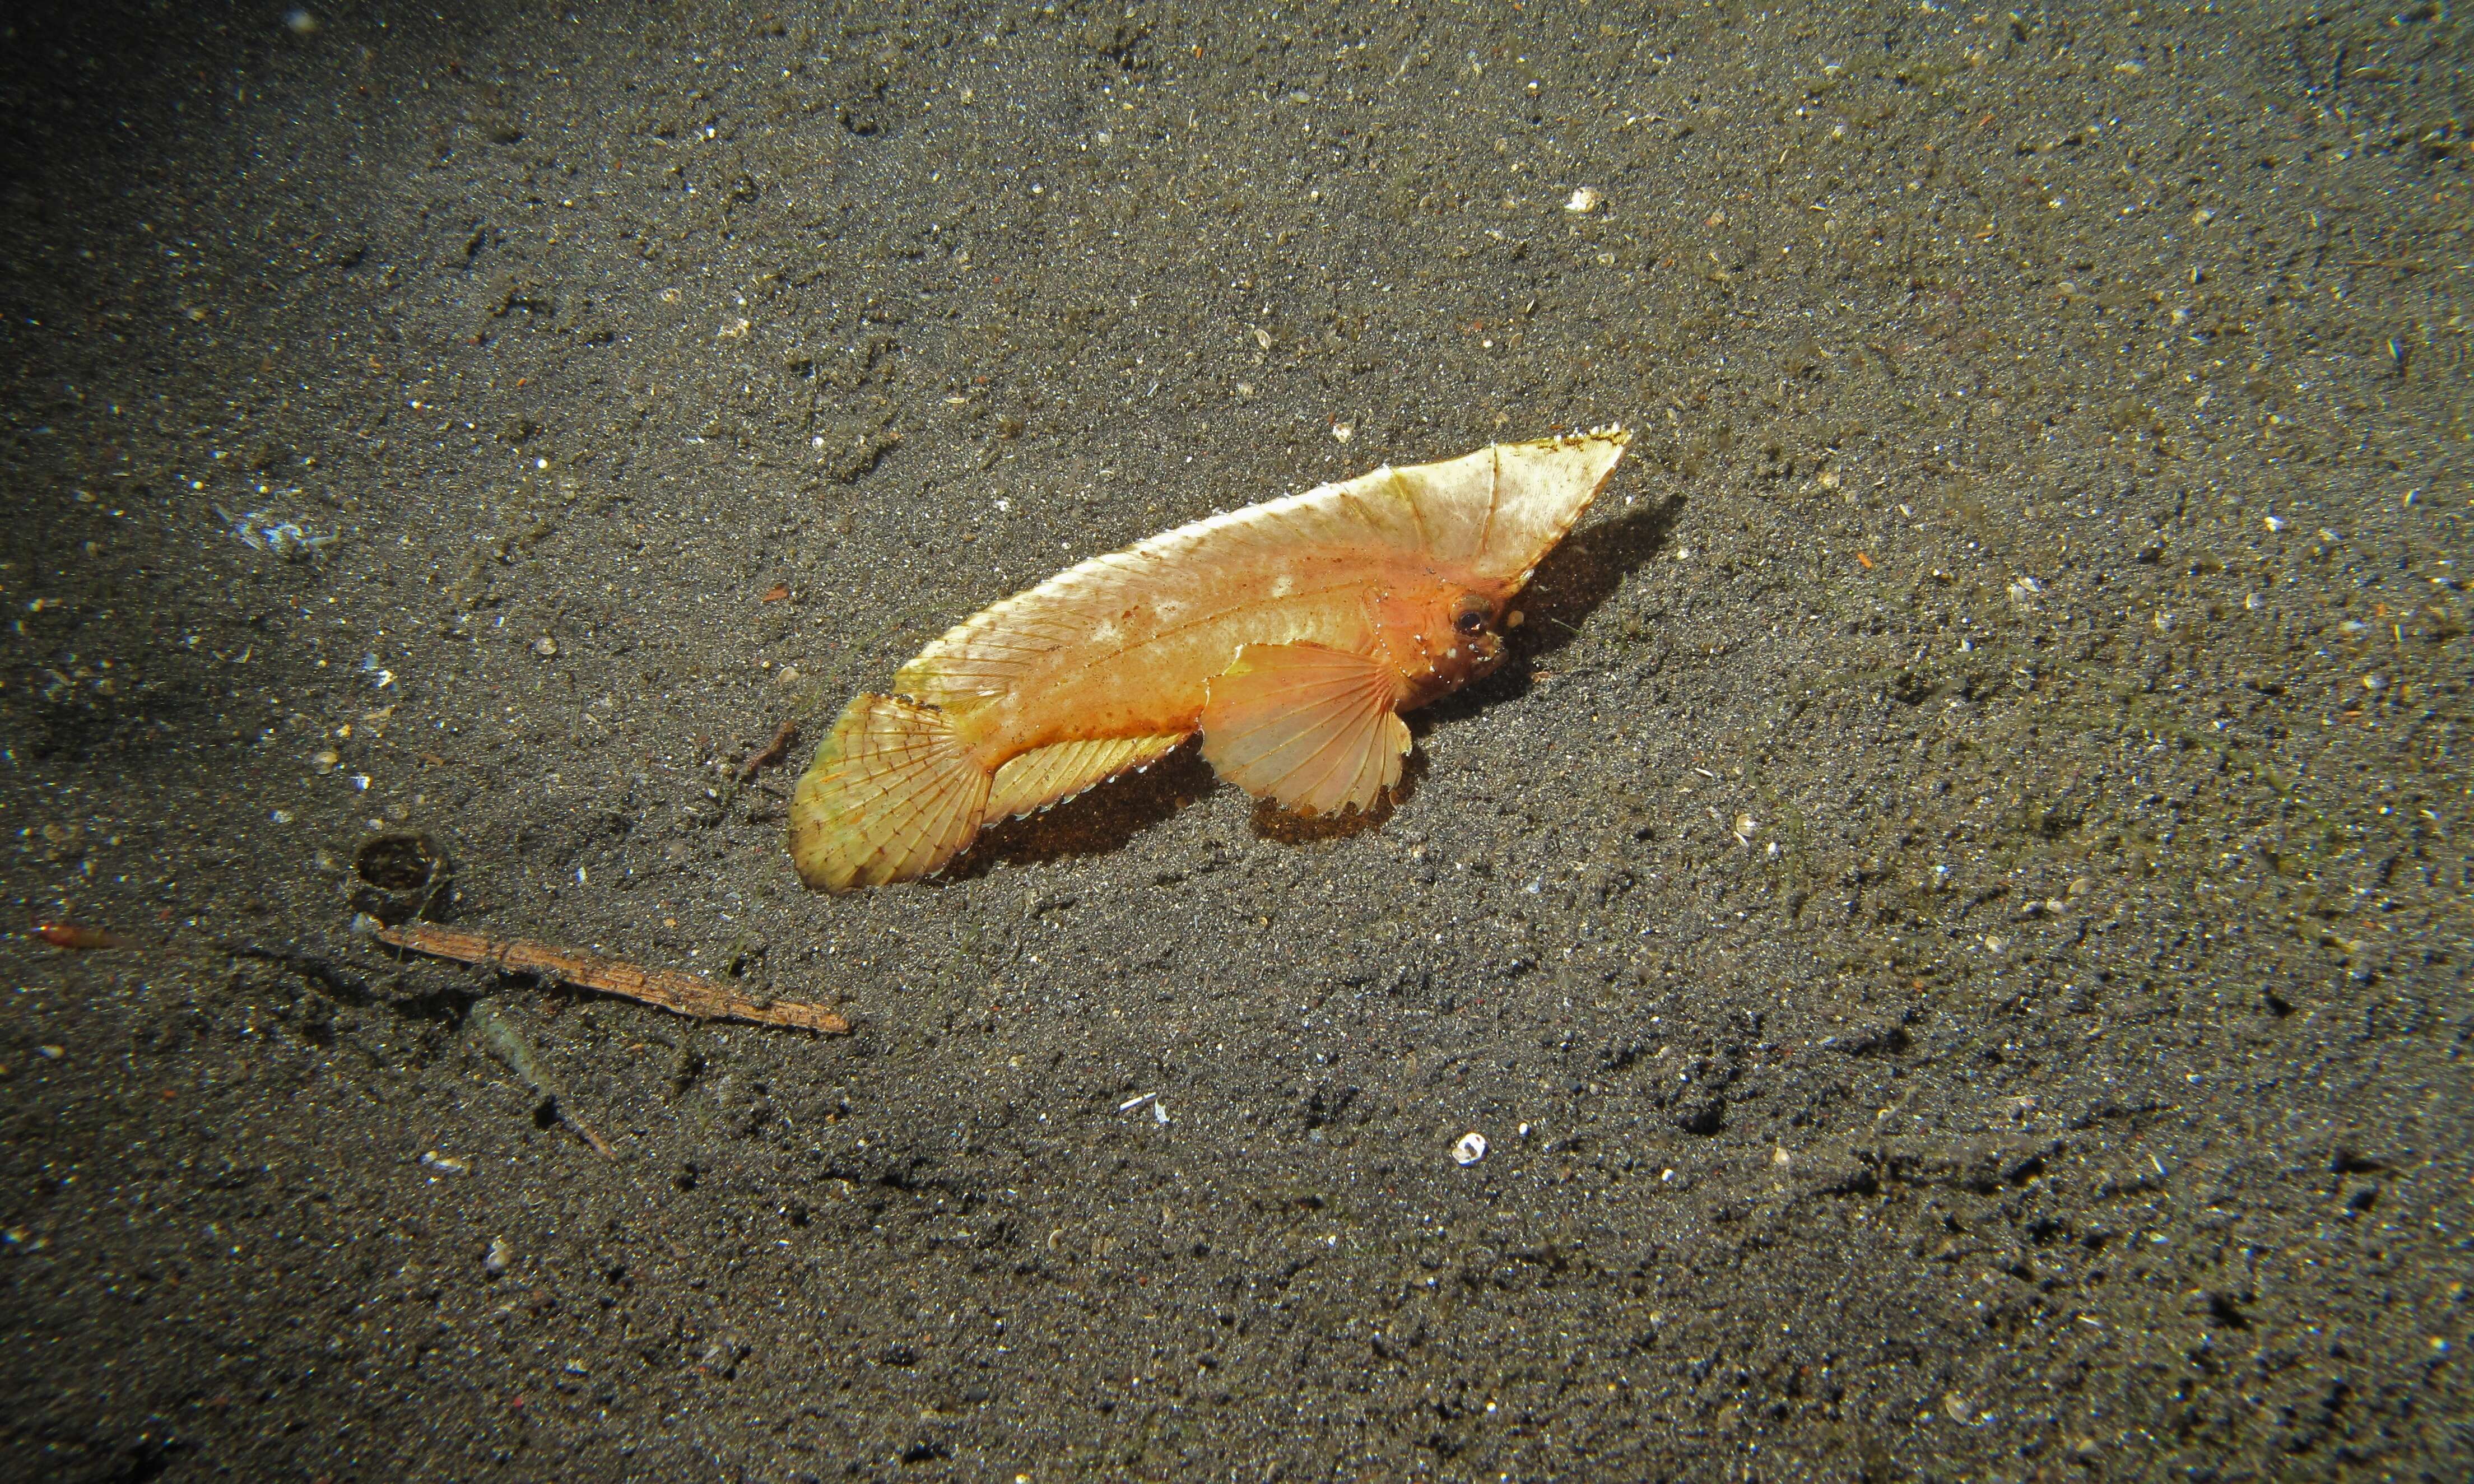 Image of Cockatoo fish